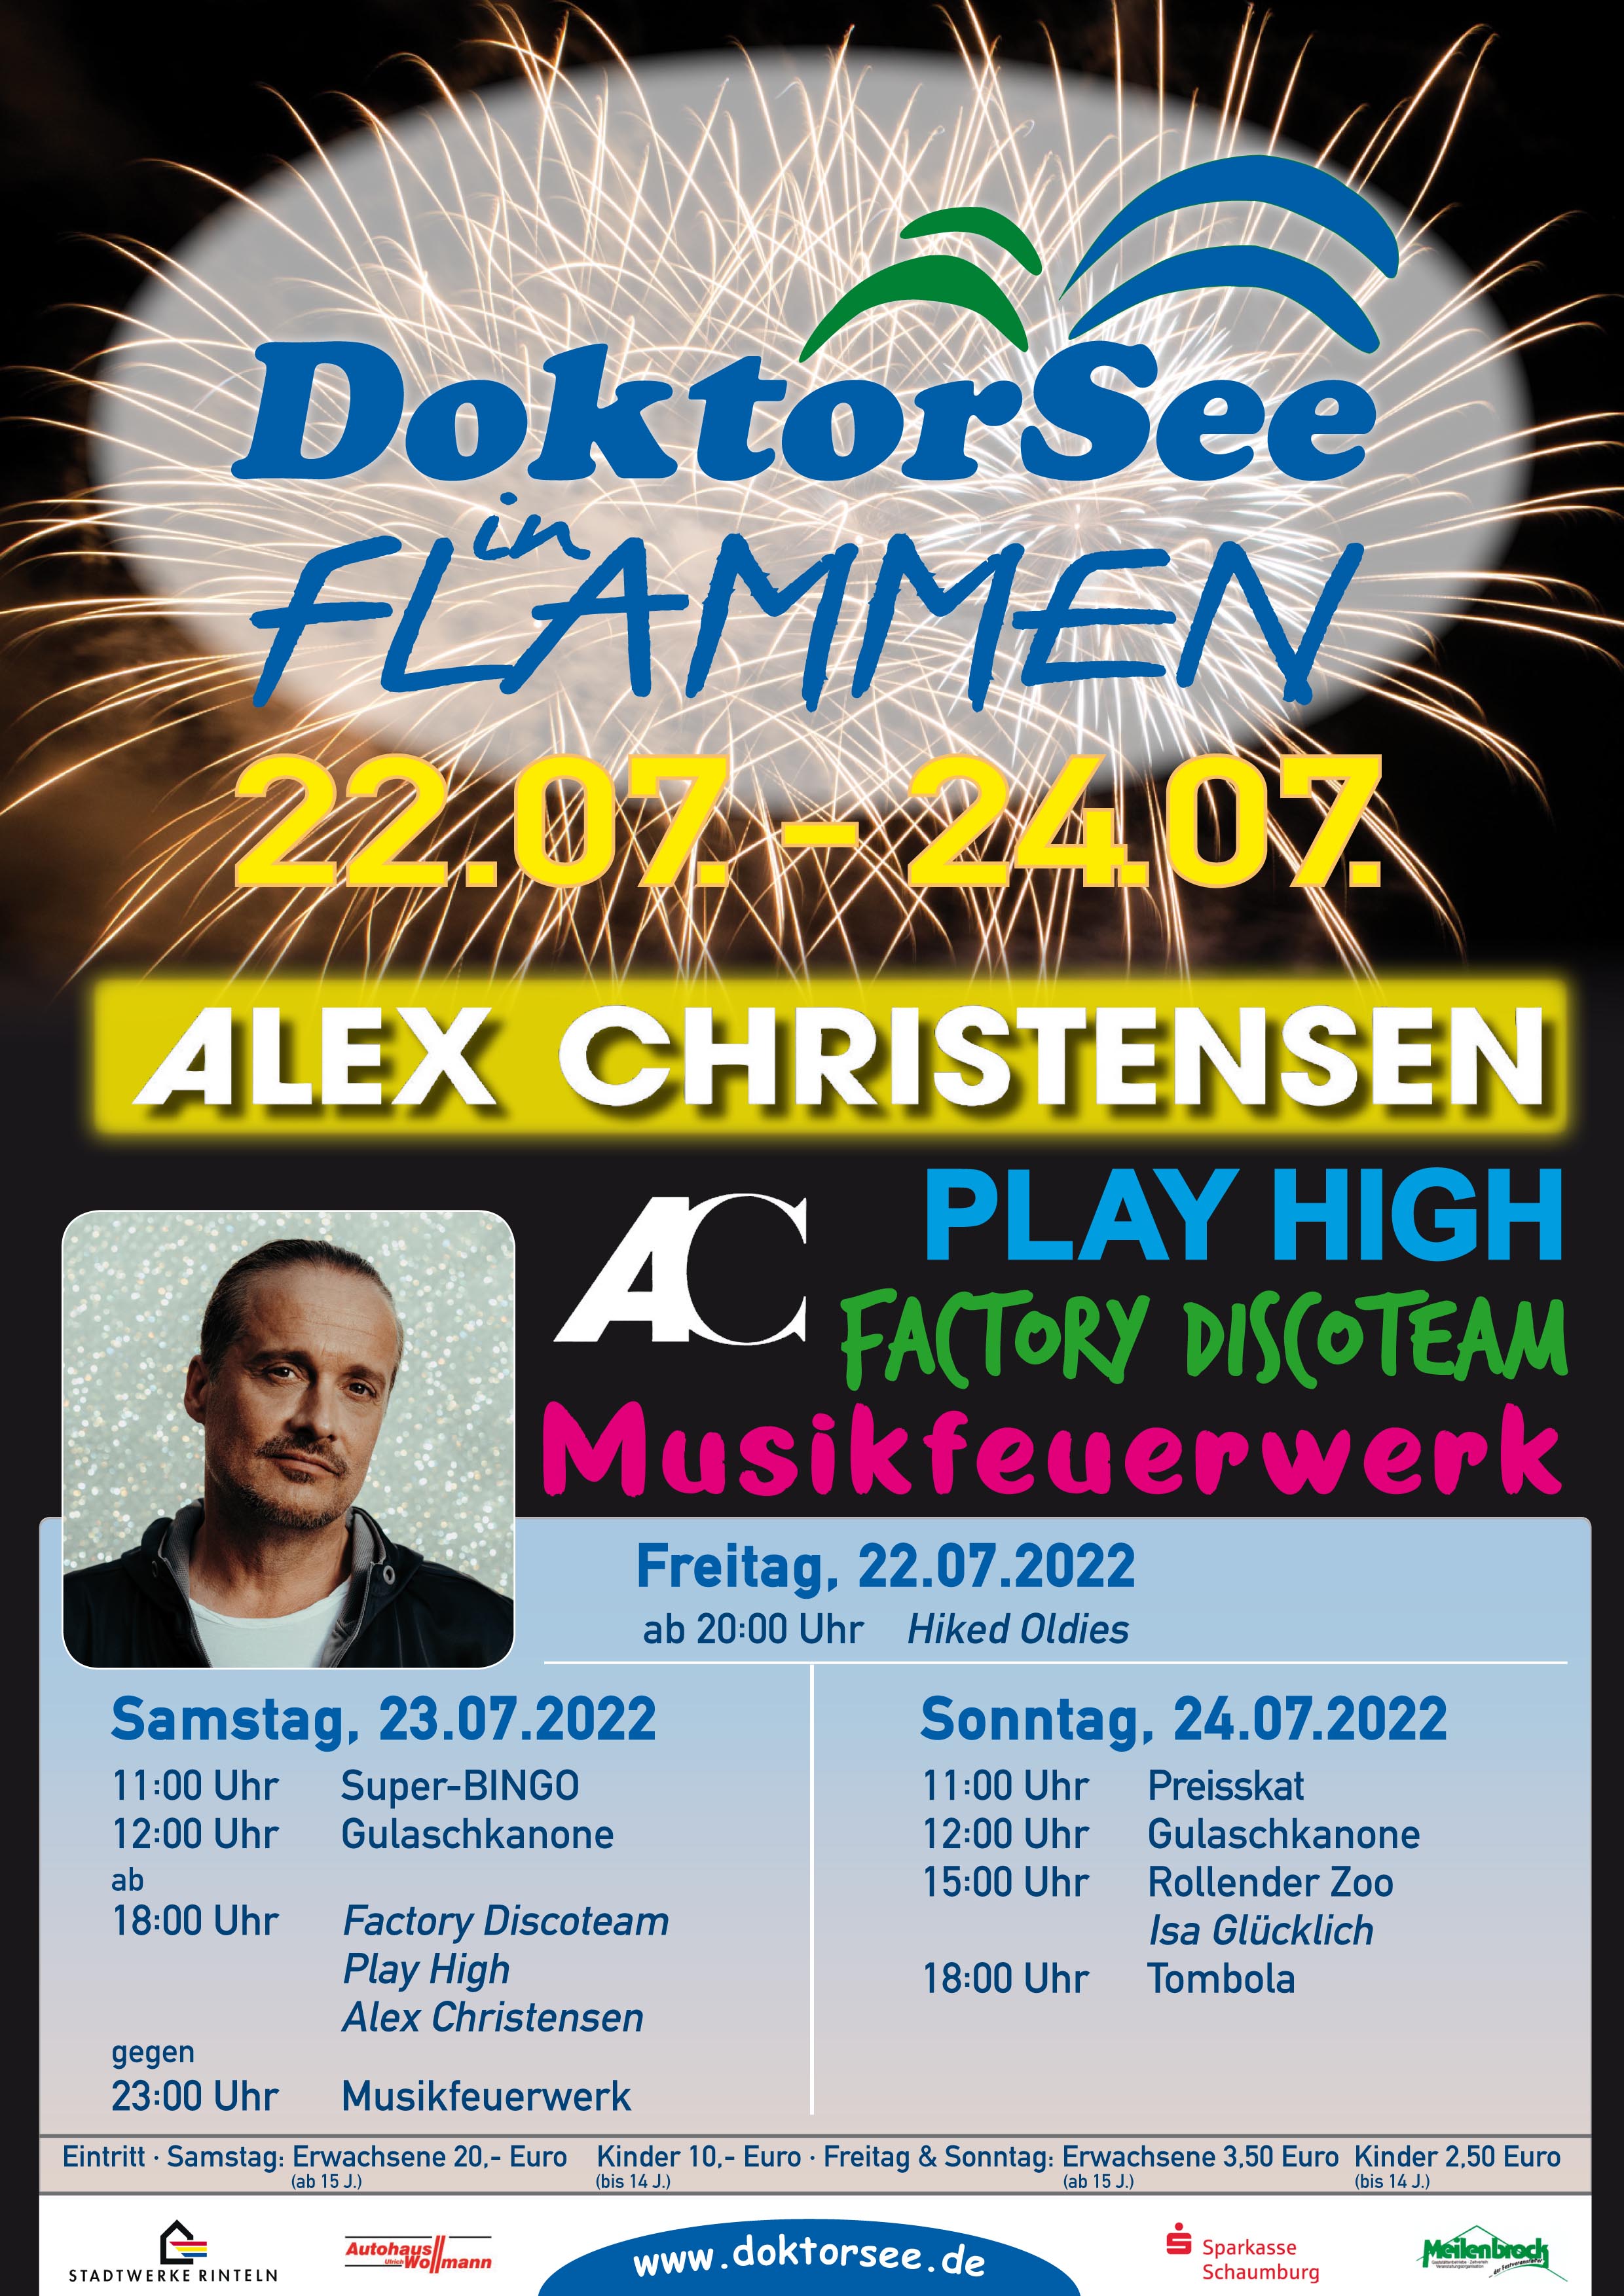 Rinteln, DoktorSee in Flammen 2022